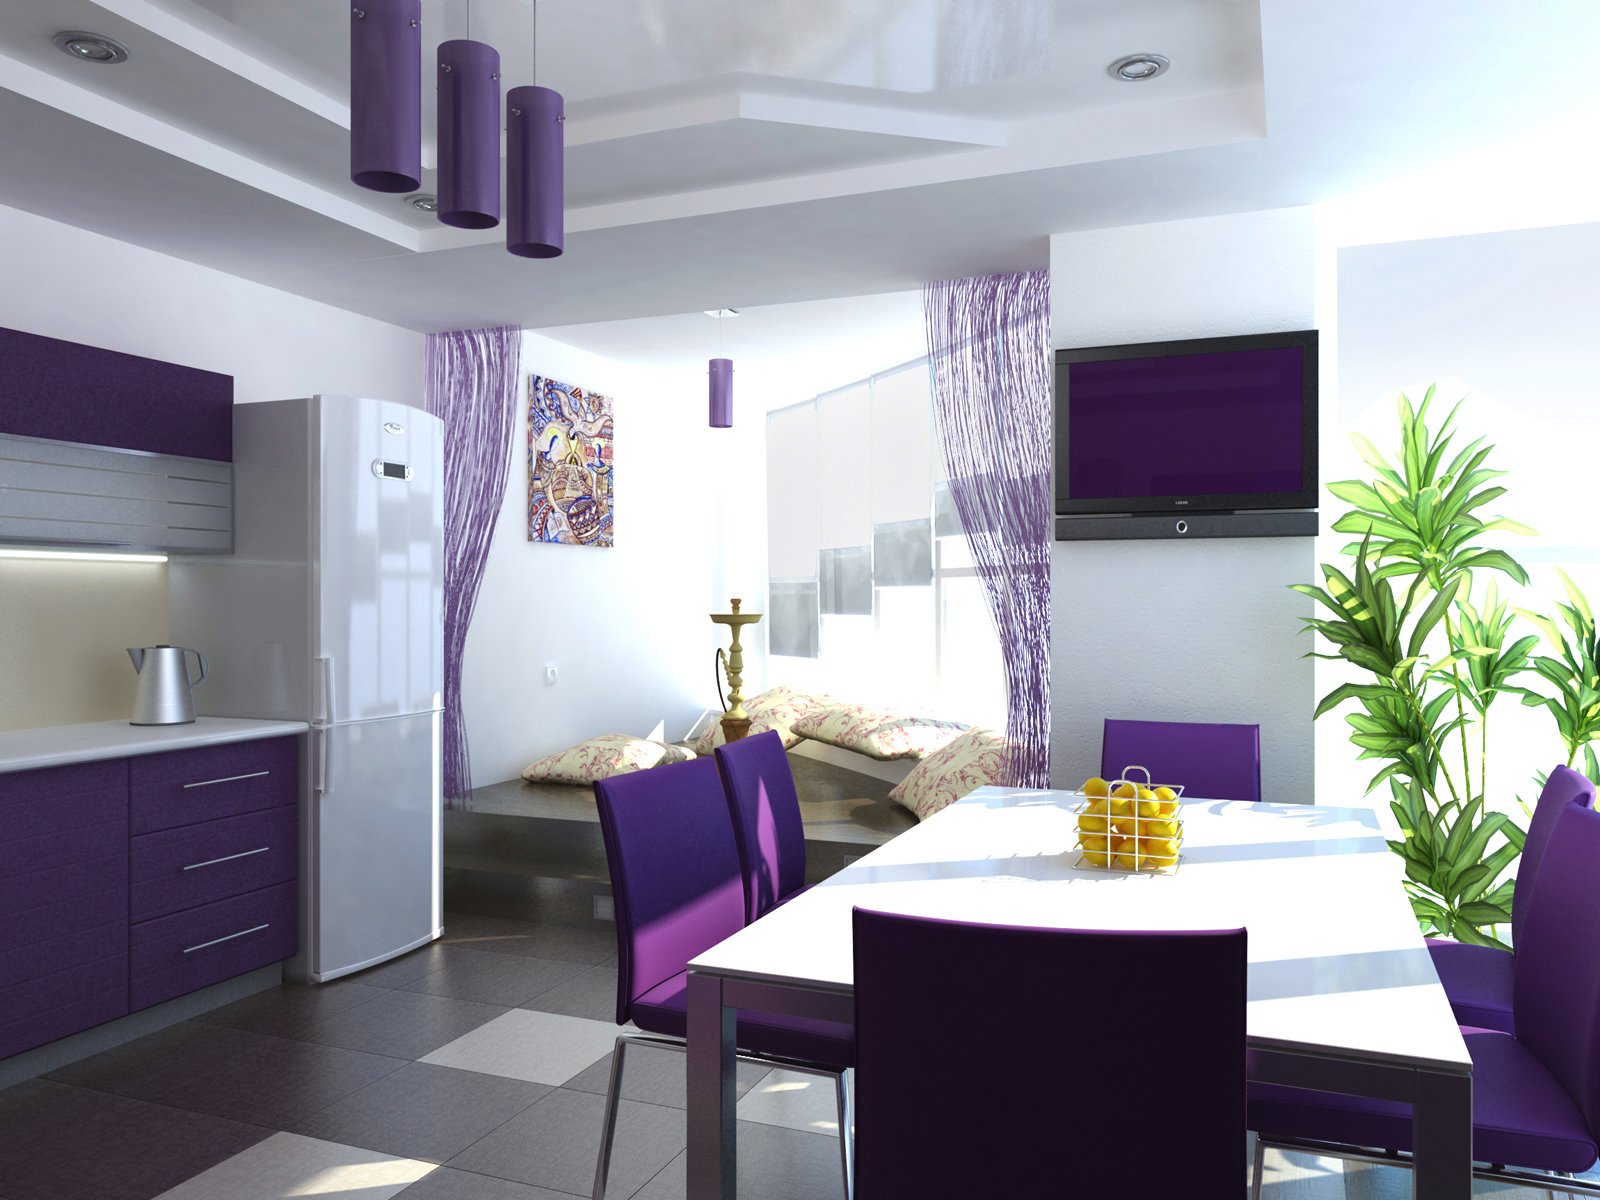 Кухня Фиолетовая Дизайн